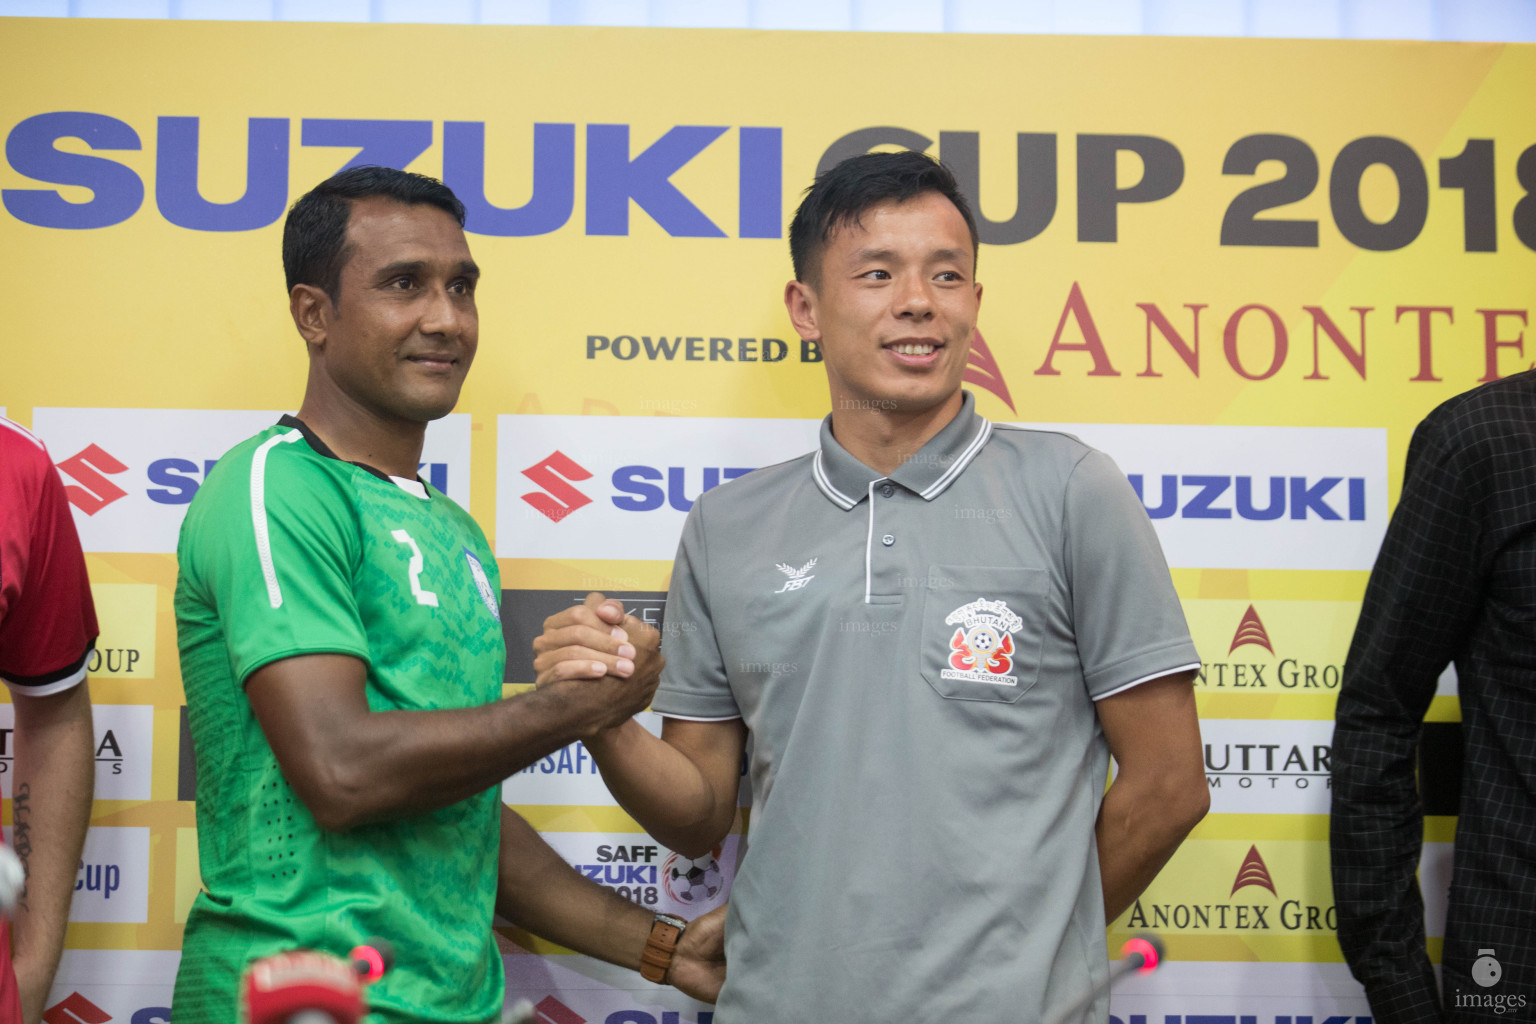 SAFF Suzuki Cup 2018 prematch press conferences in Dhaka, Bangladesh, Monday, September 03, 2018. (Images.mv Photo/ Hussain Sinan).